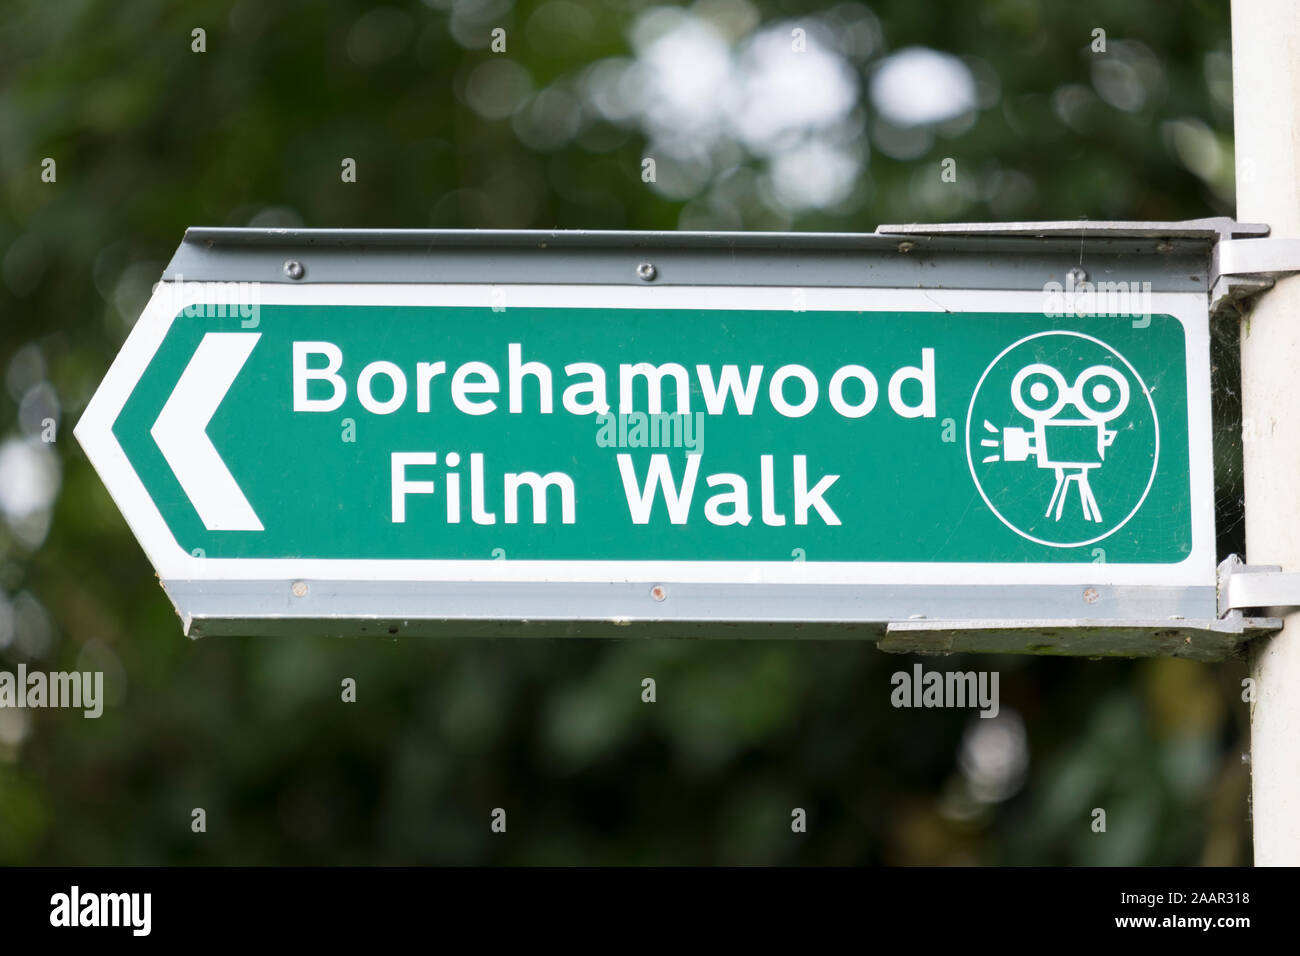 Borehamwood Film Walk sign on a lampost. Stock Photo